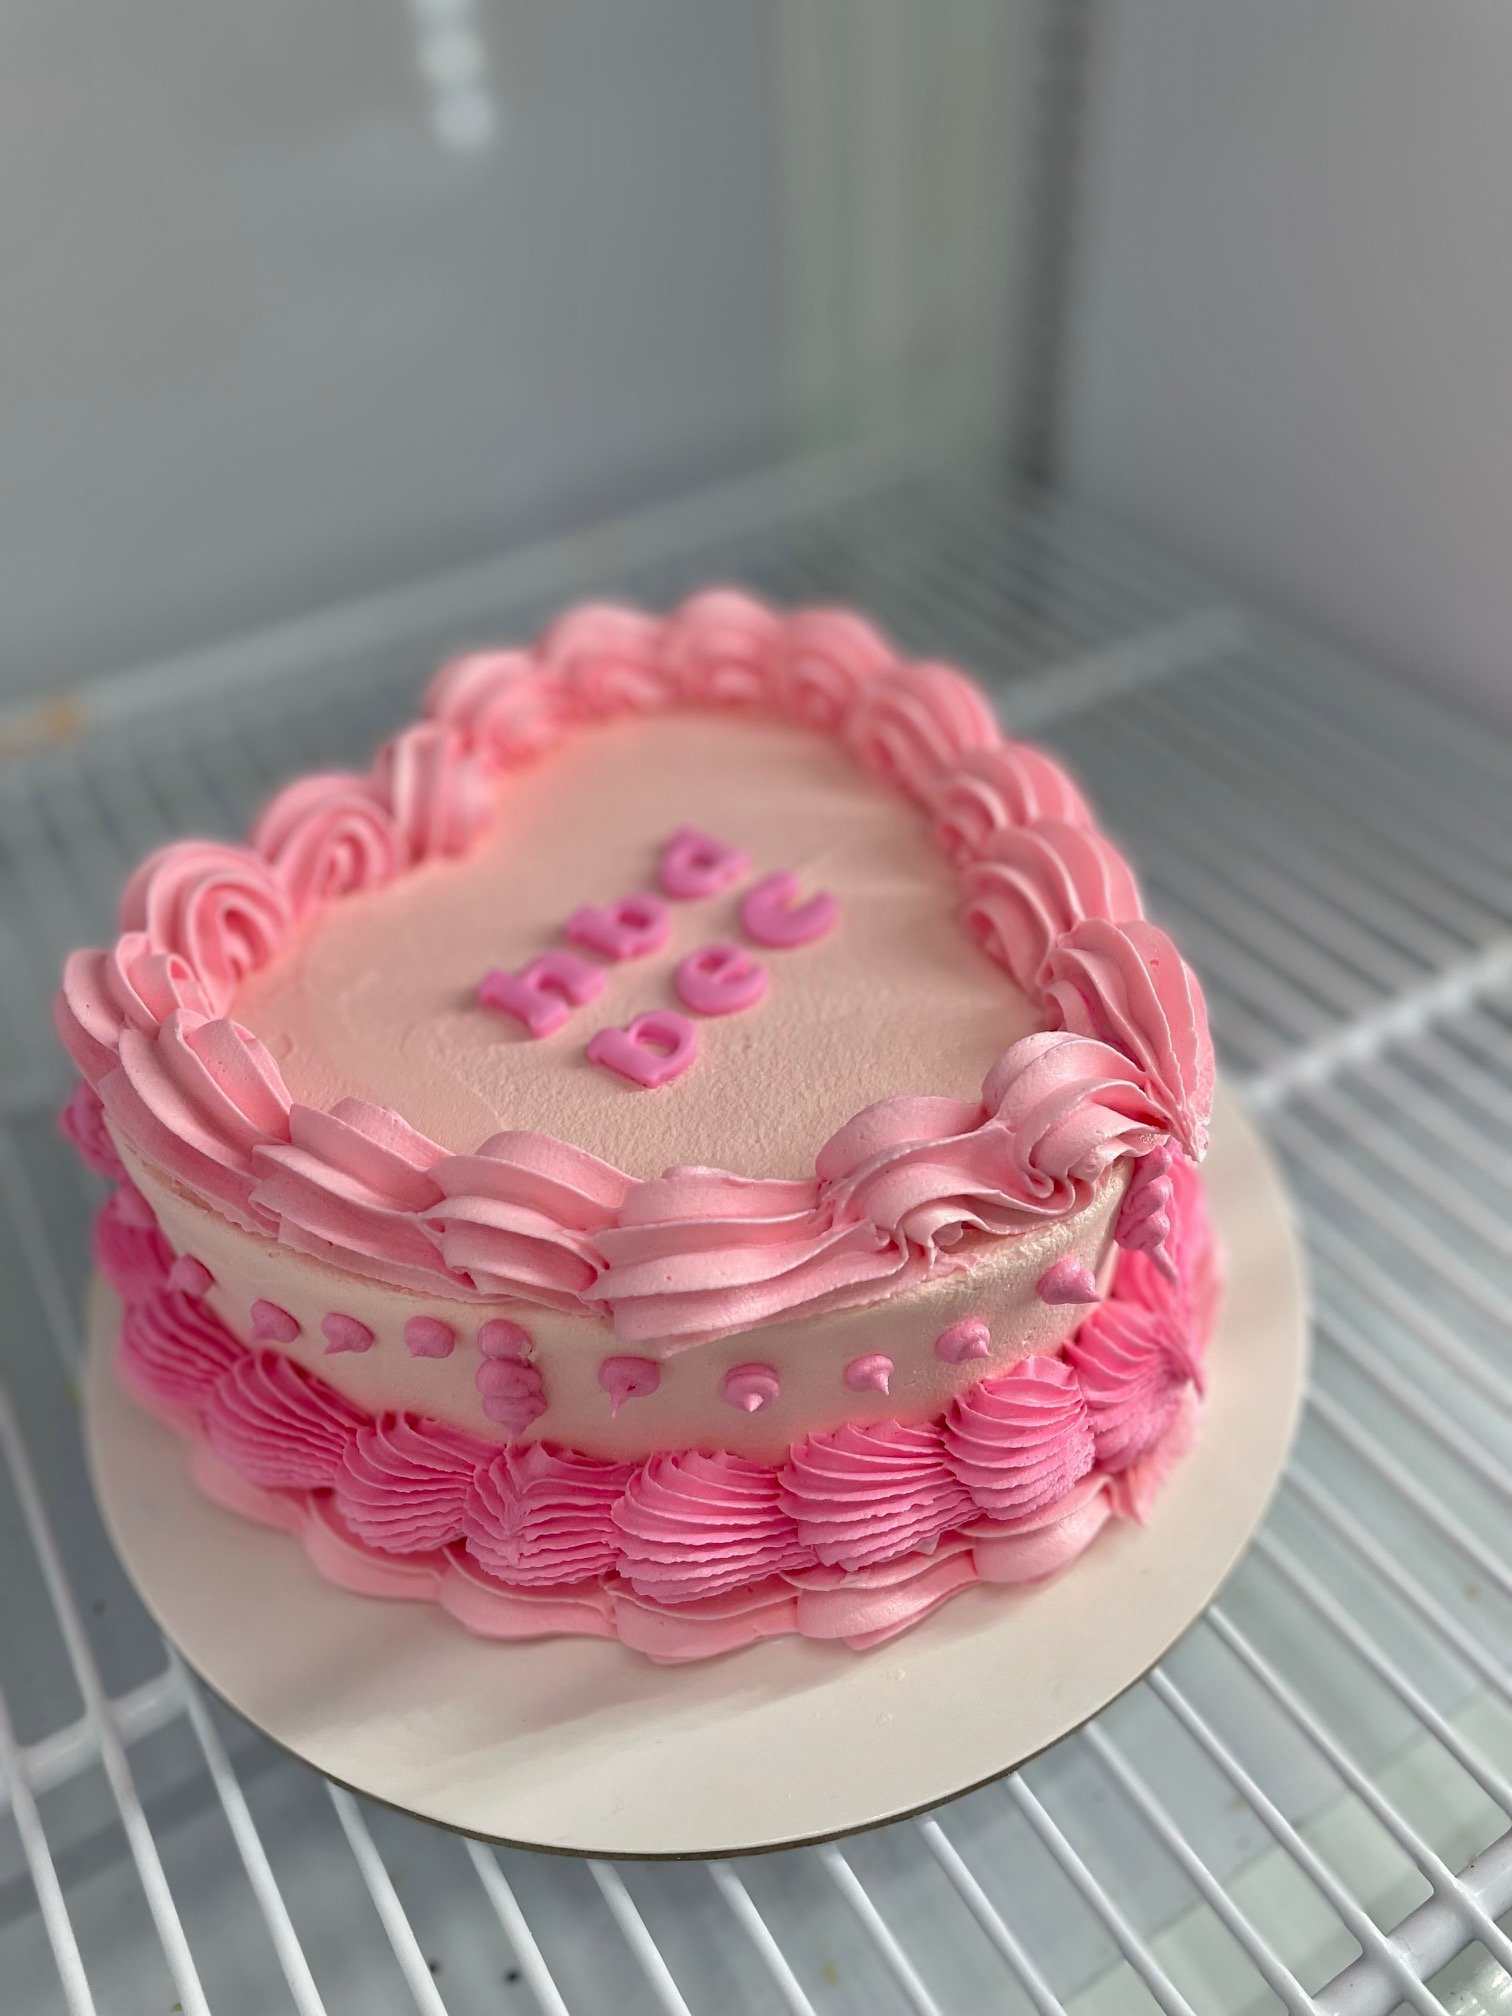 Barbie Fondant Birthday Cake | Baked by Nataleen